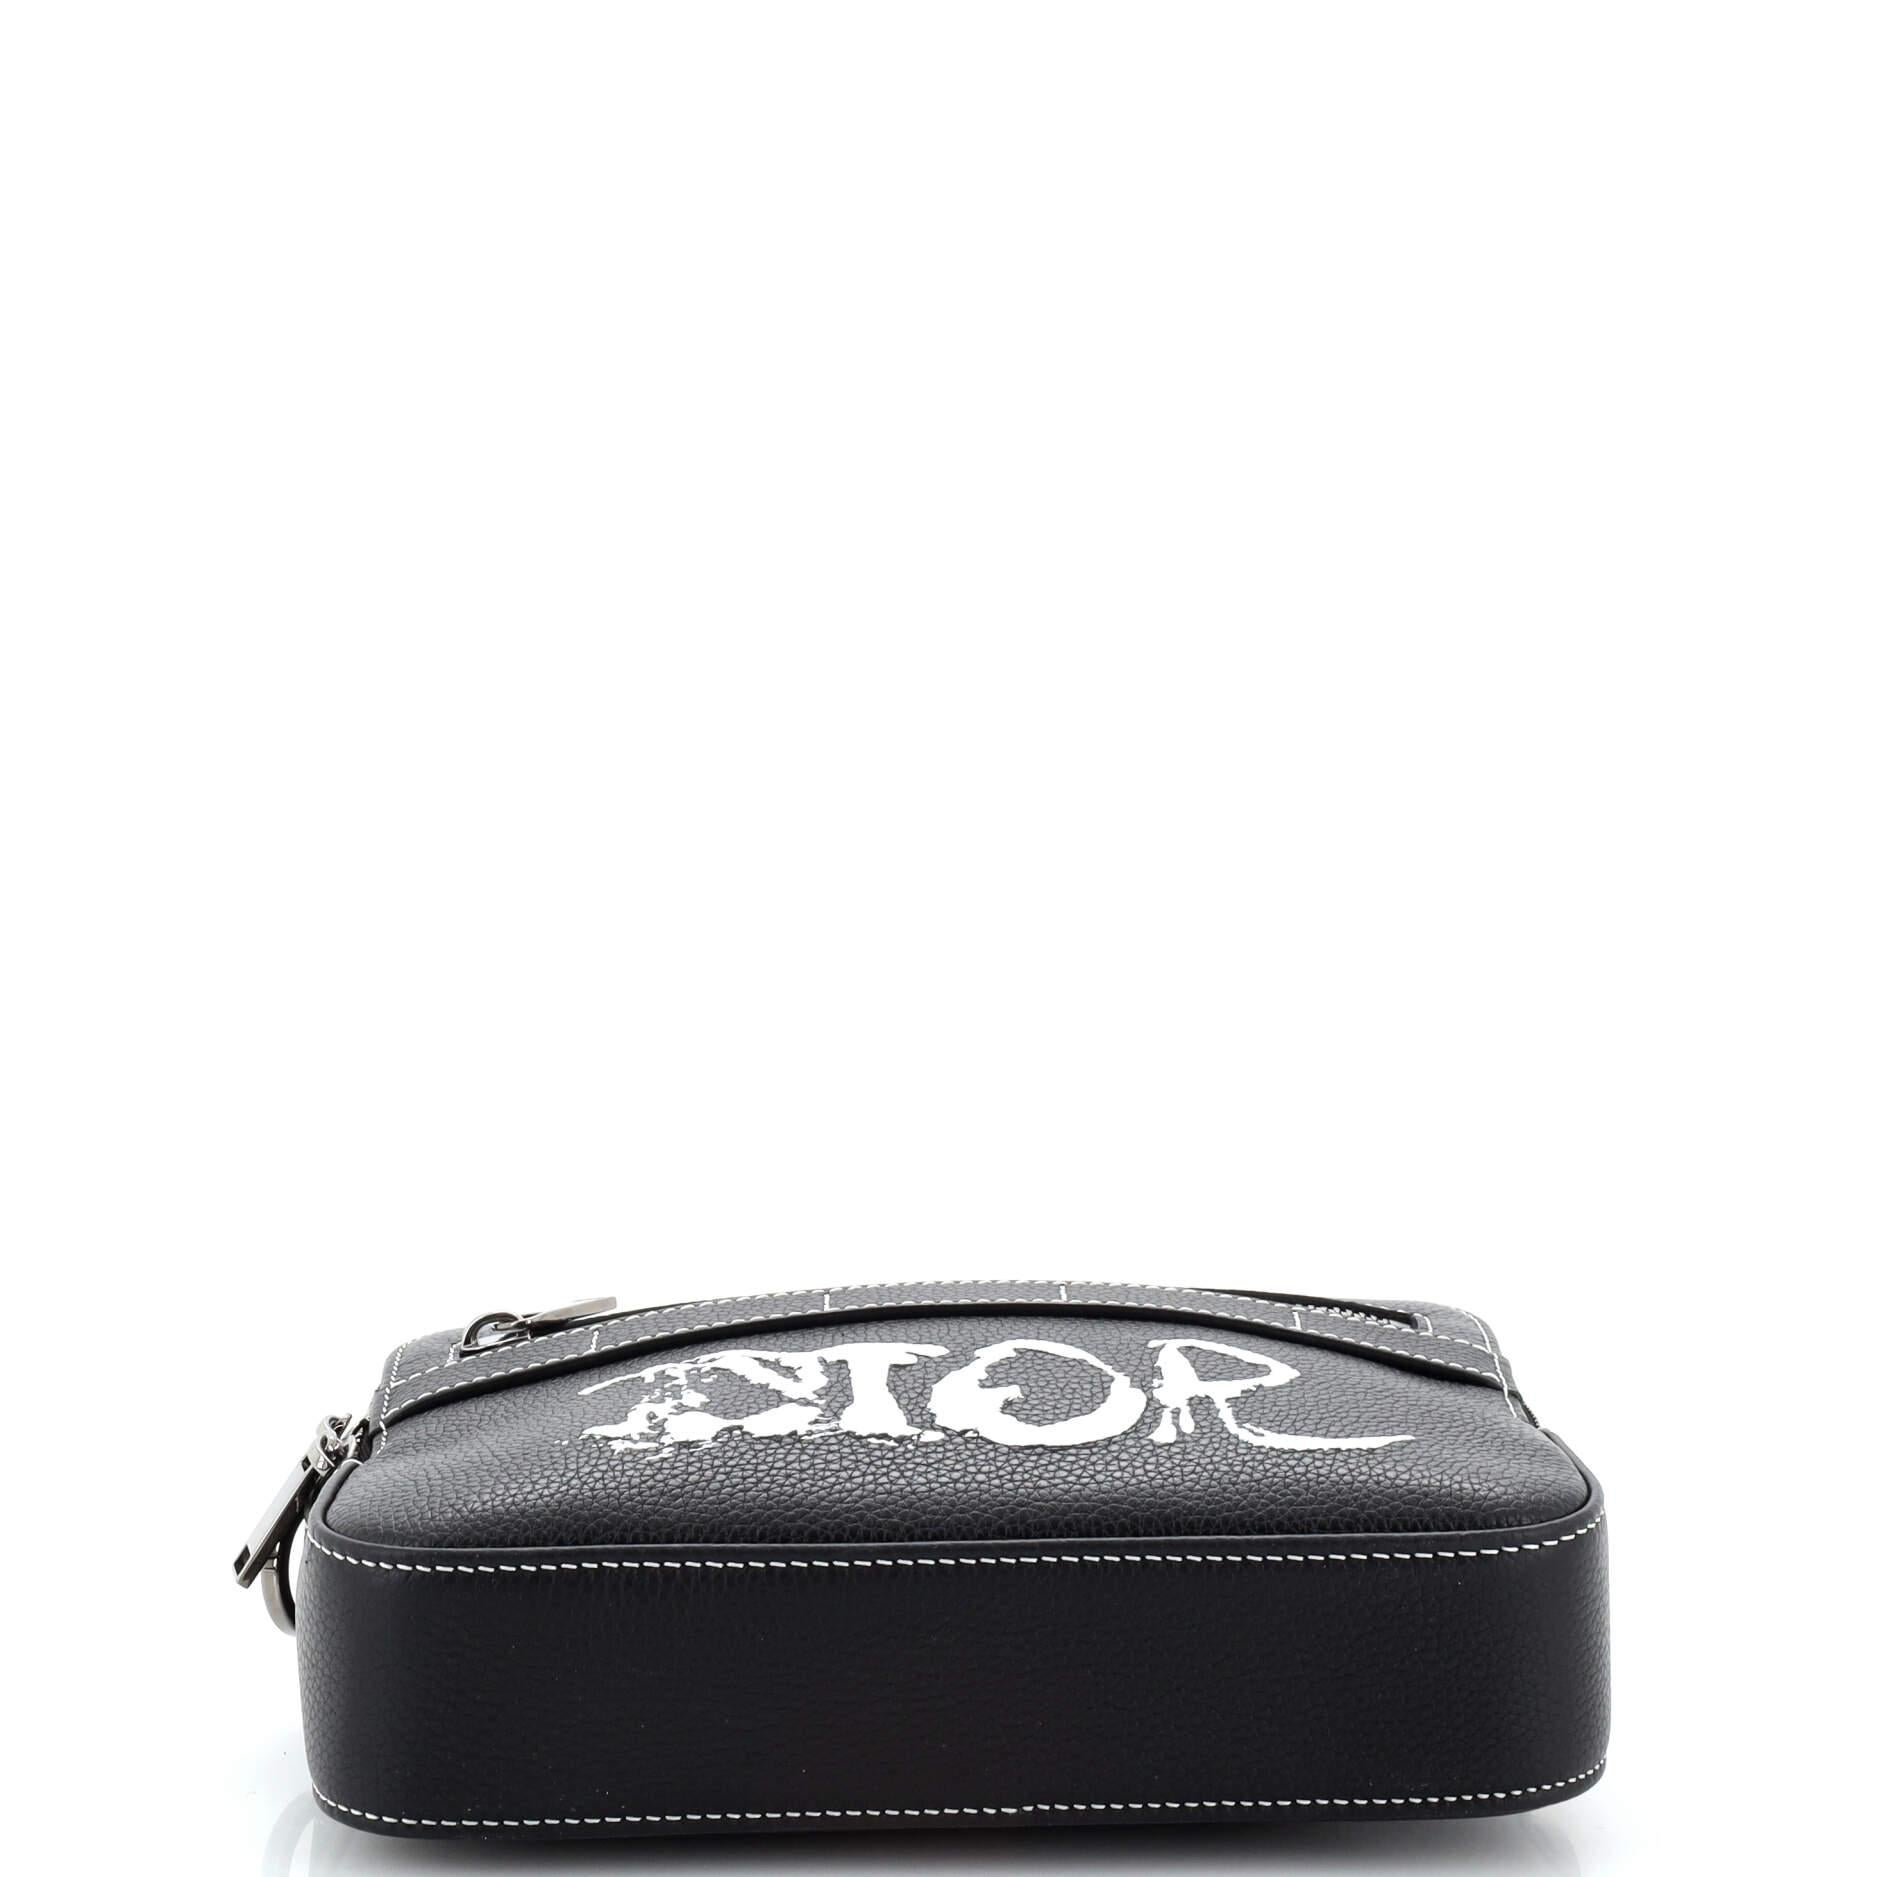 Women's or Men's Christian Dior Peter Doig Safari Messenger Bag Printed Leather